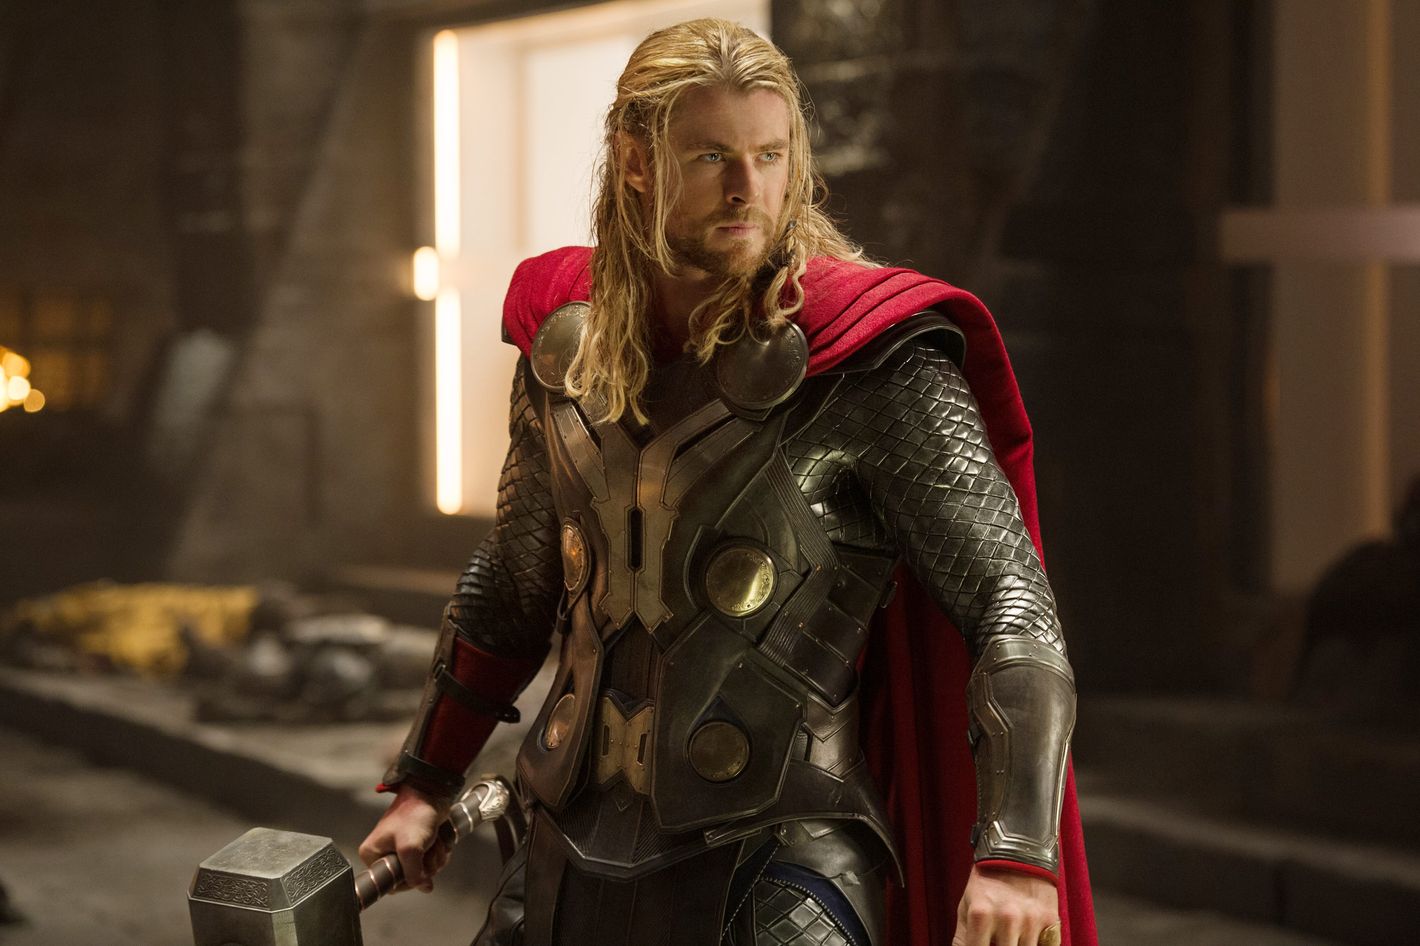 Thor: Ragnarok  Rotten Tomatoes